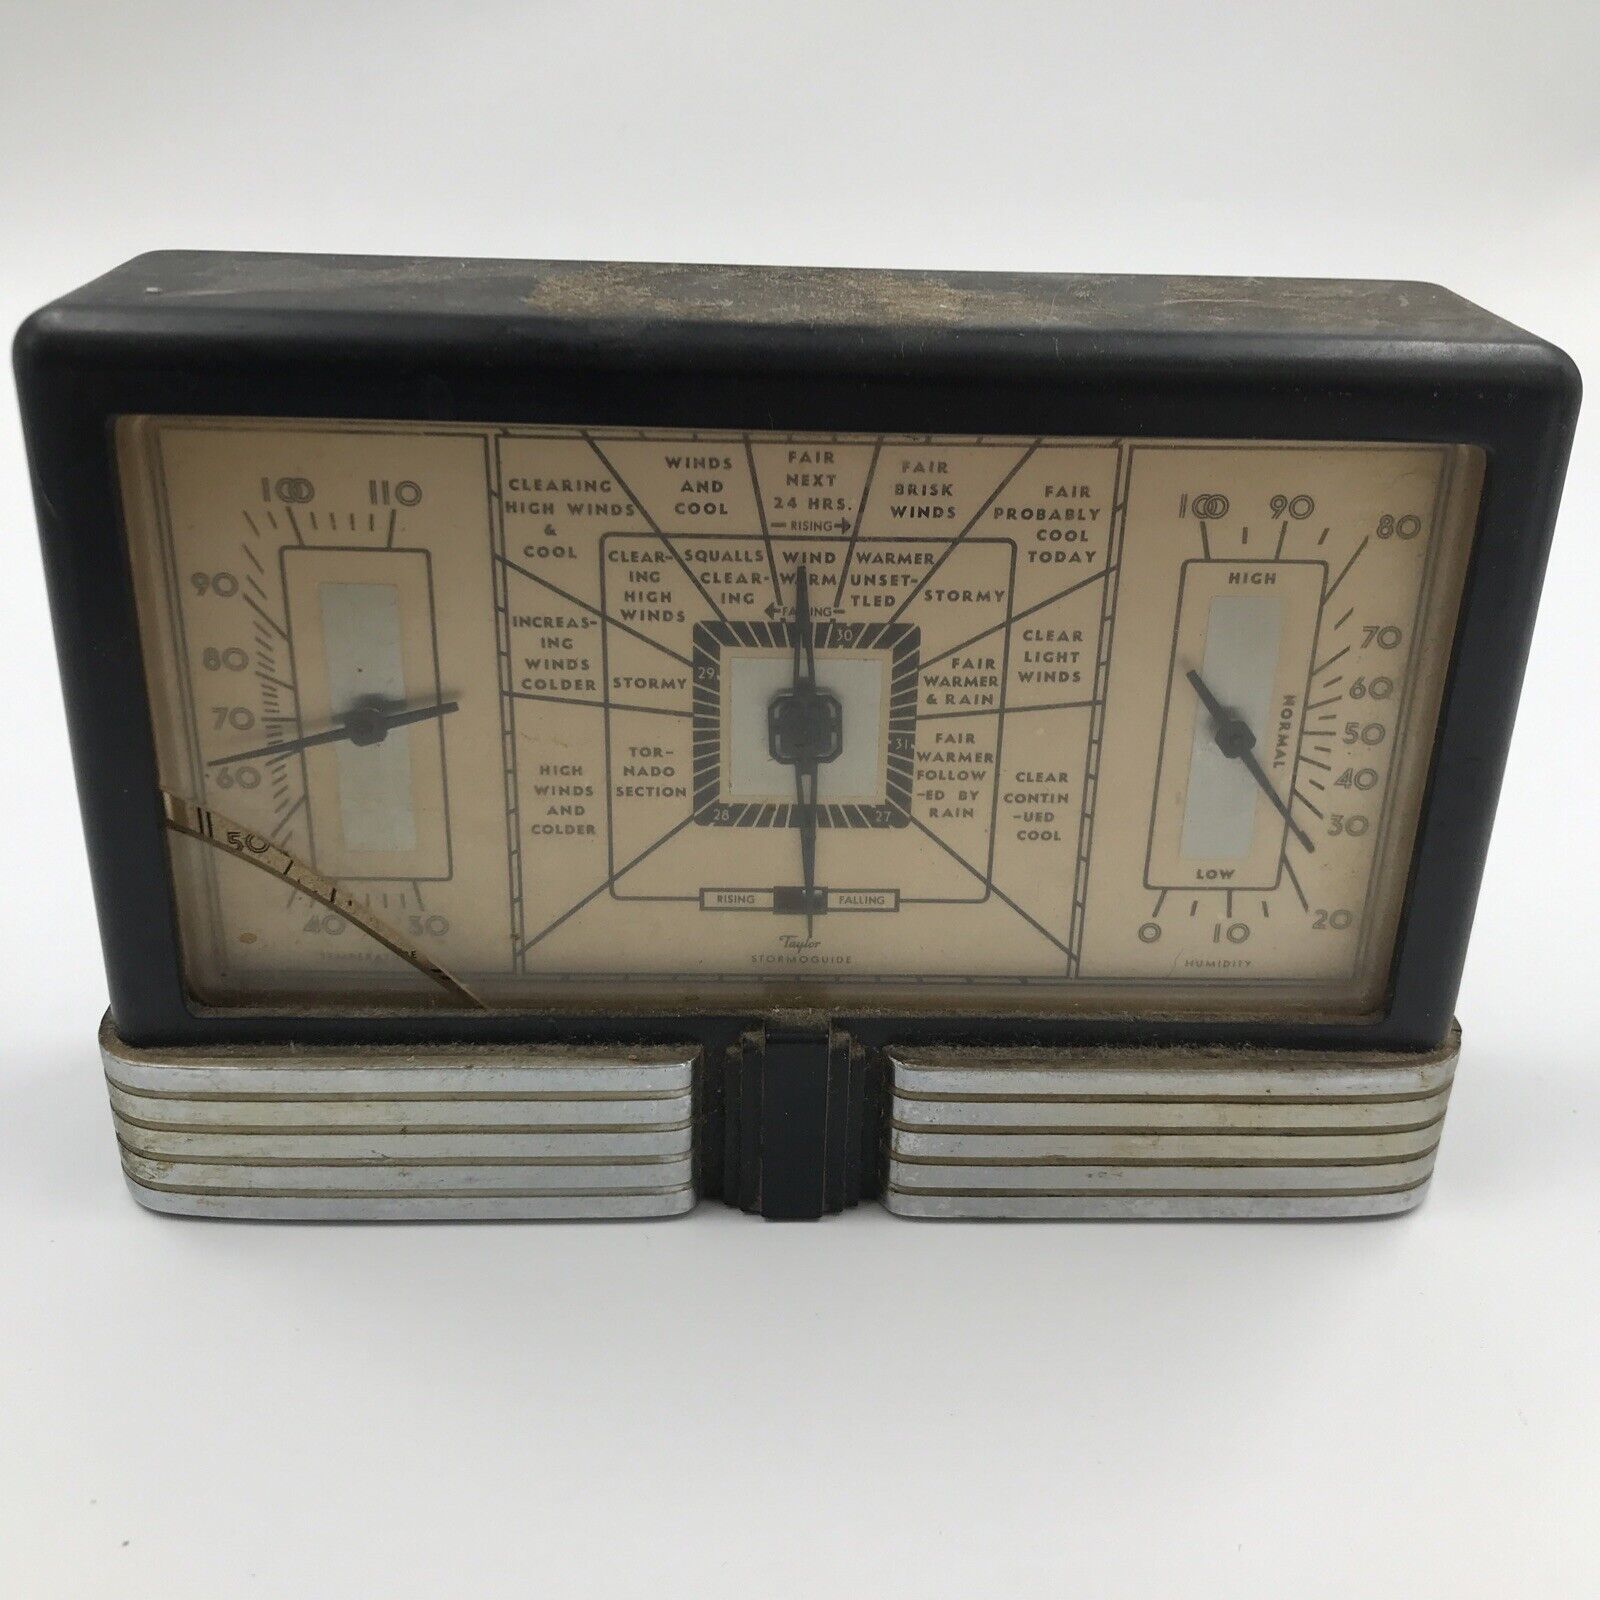 Vintage 1927 Taylor Stormoguide Weather Station Hygrometer w/ Altitude Dial